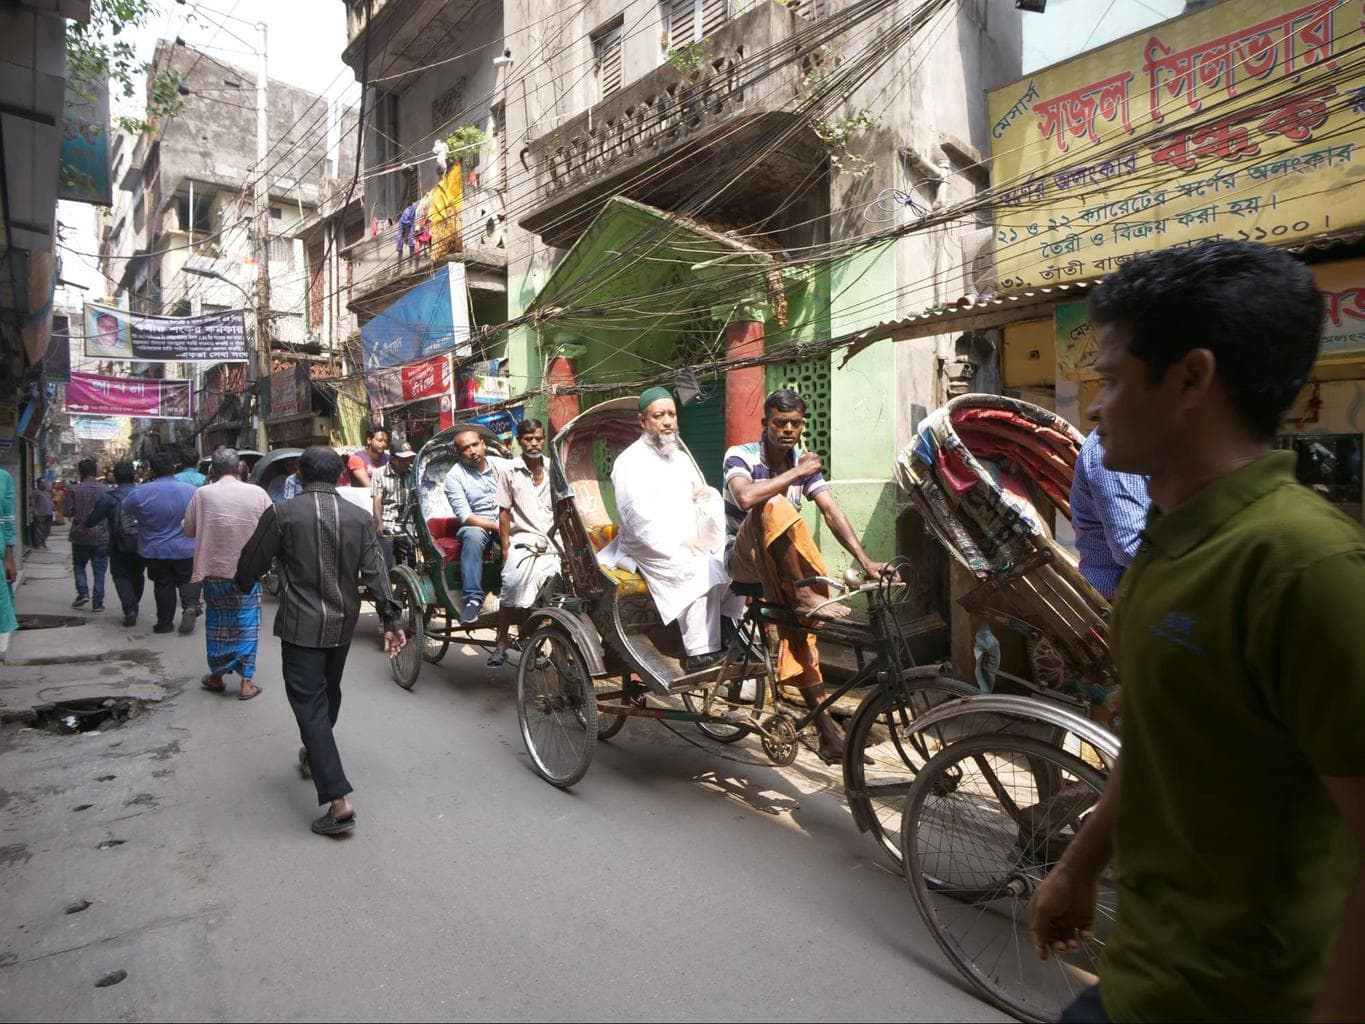 Shankhani Bazaar